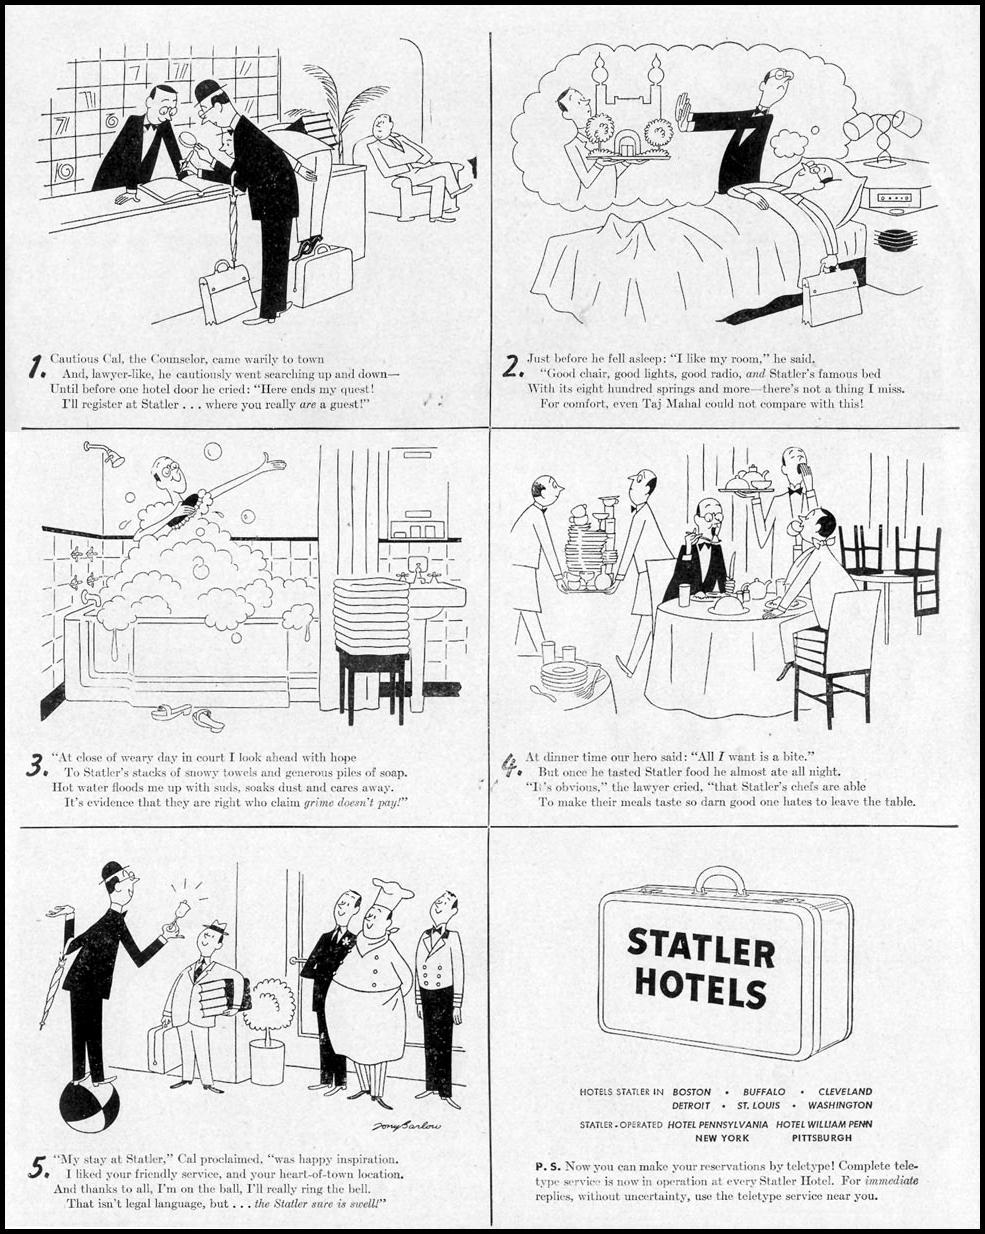 STATLER HOTELS
LIFE
11/15/1948
p. 119